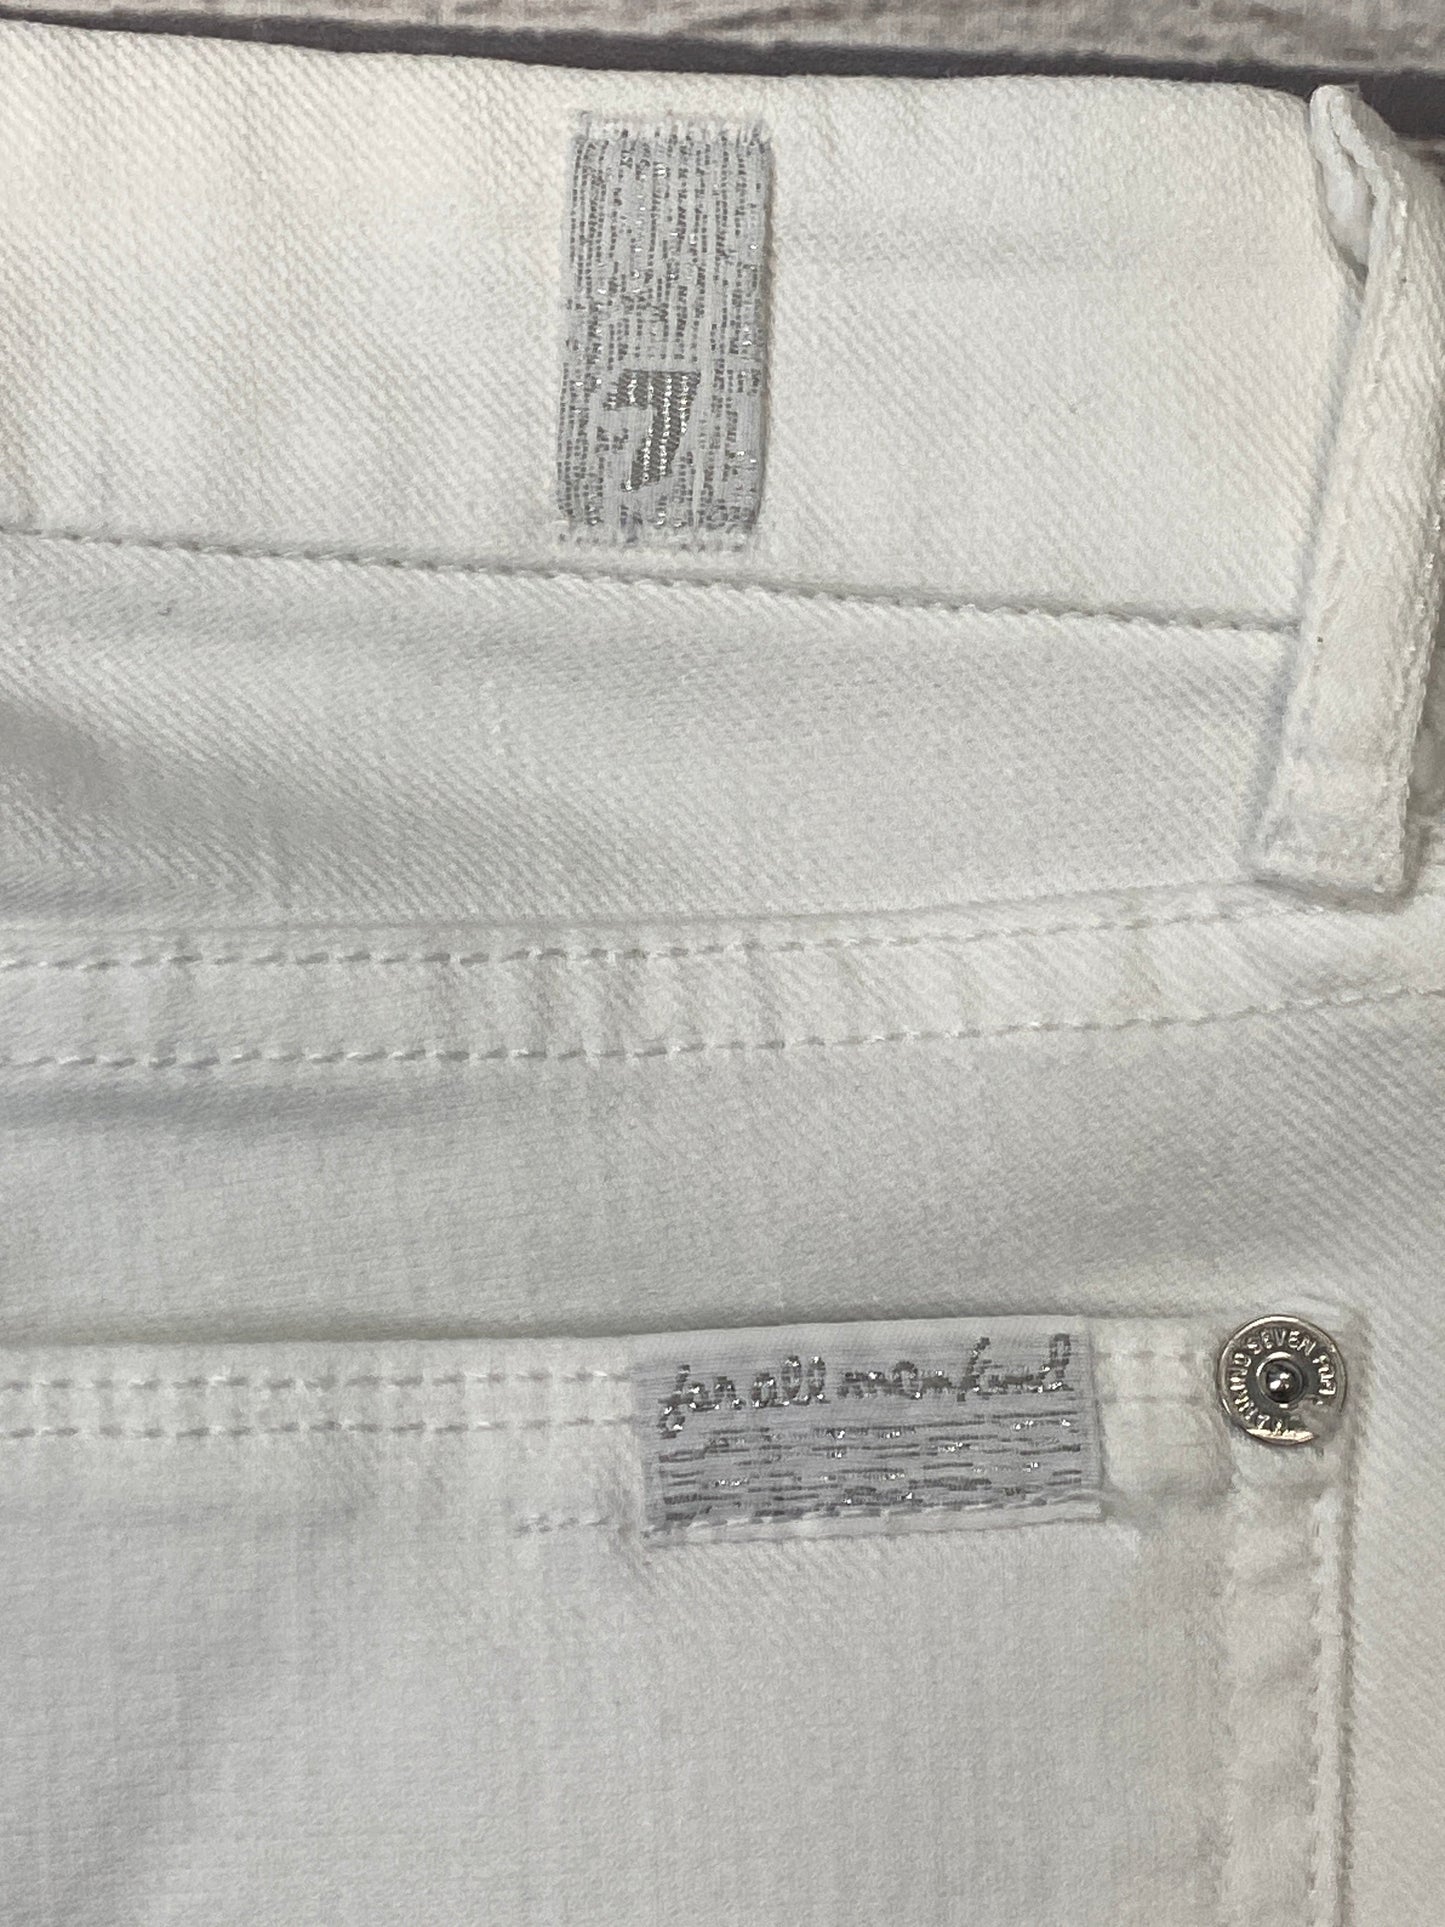 White Jeans Designer 7 For All Mankind, Size 6